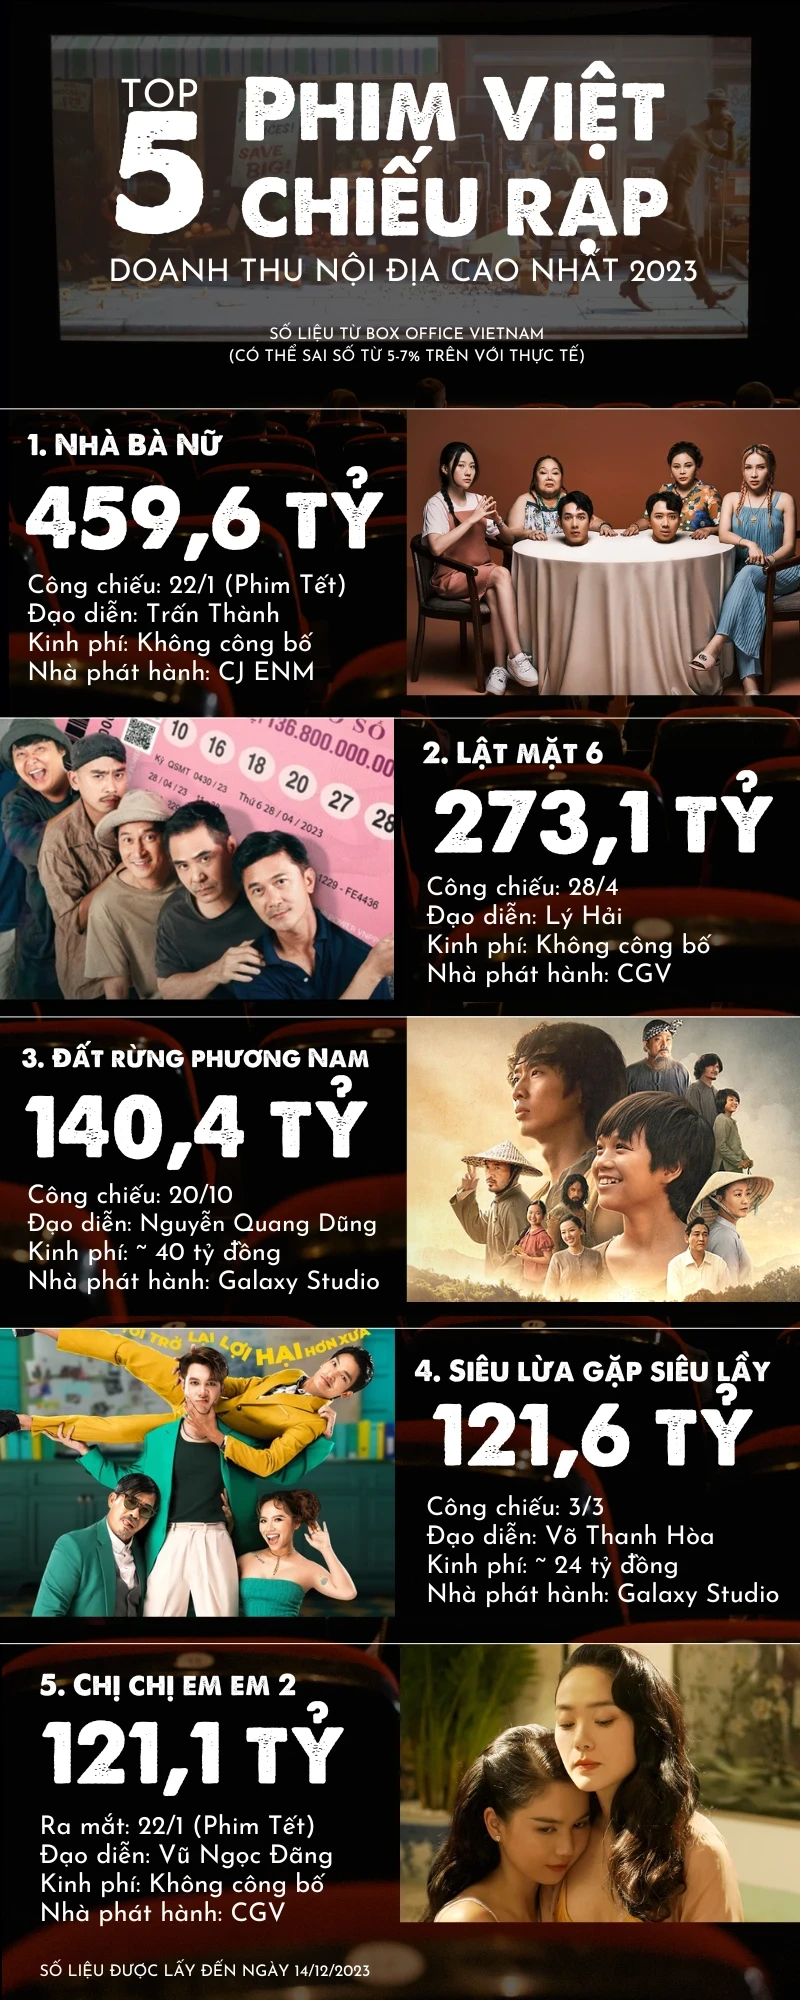 top-5-phim-viet-chieu-rap-dat-doanh-thu-cao-nhat-2023-7345.png